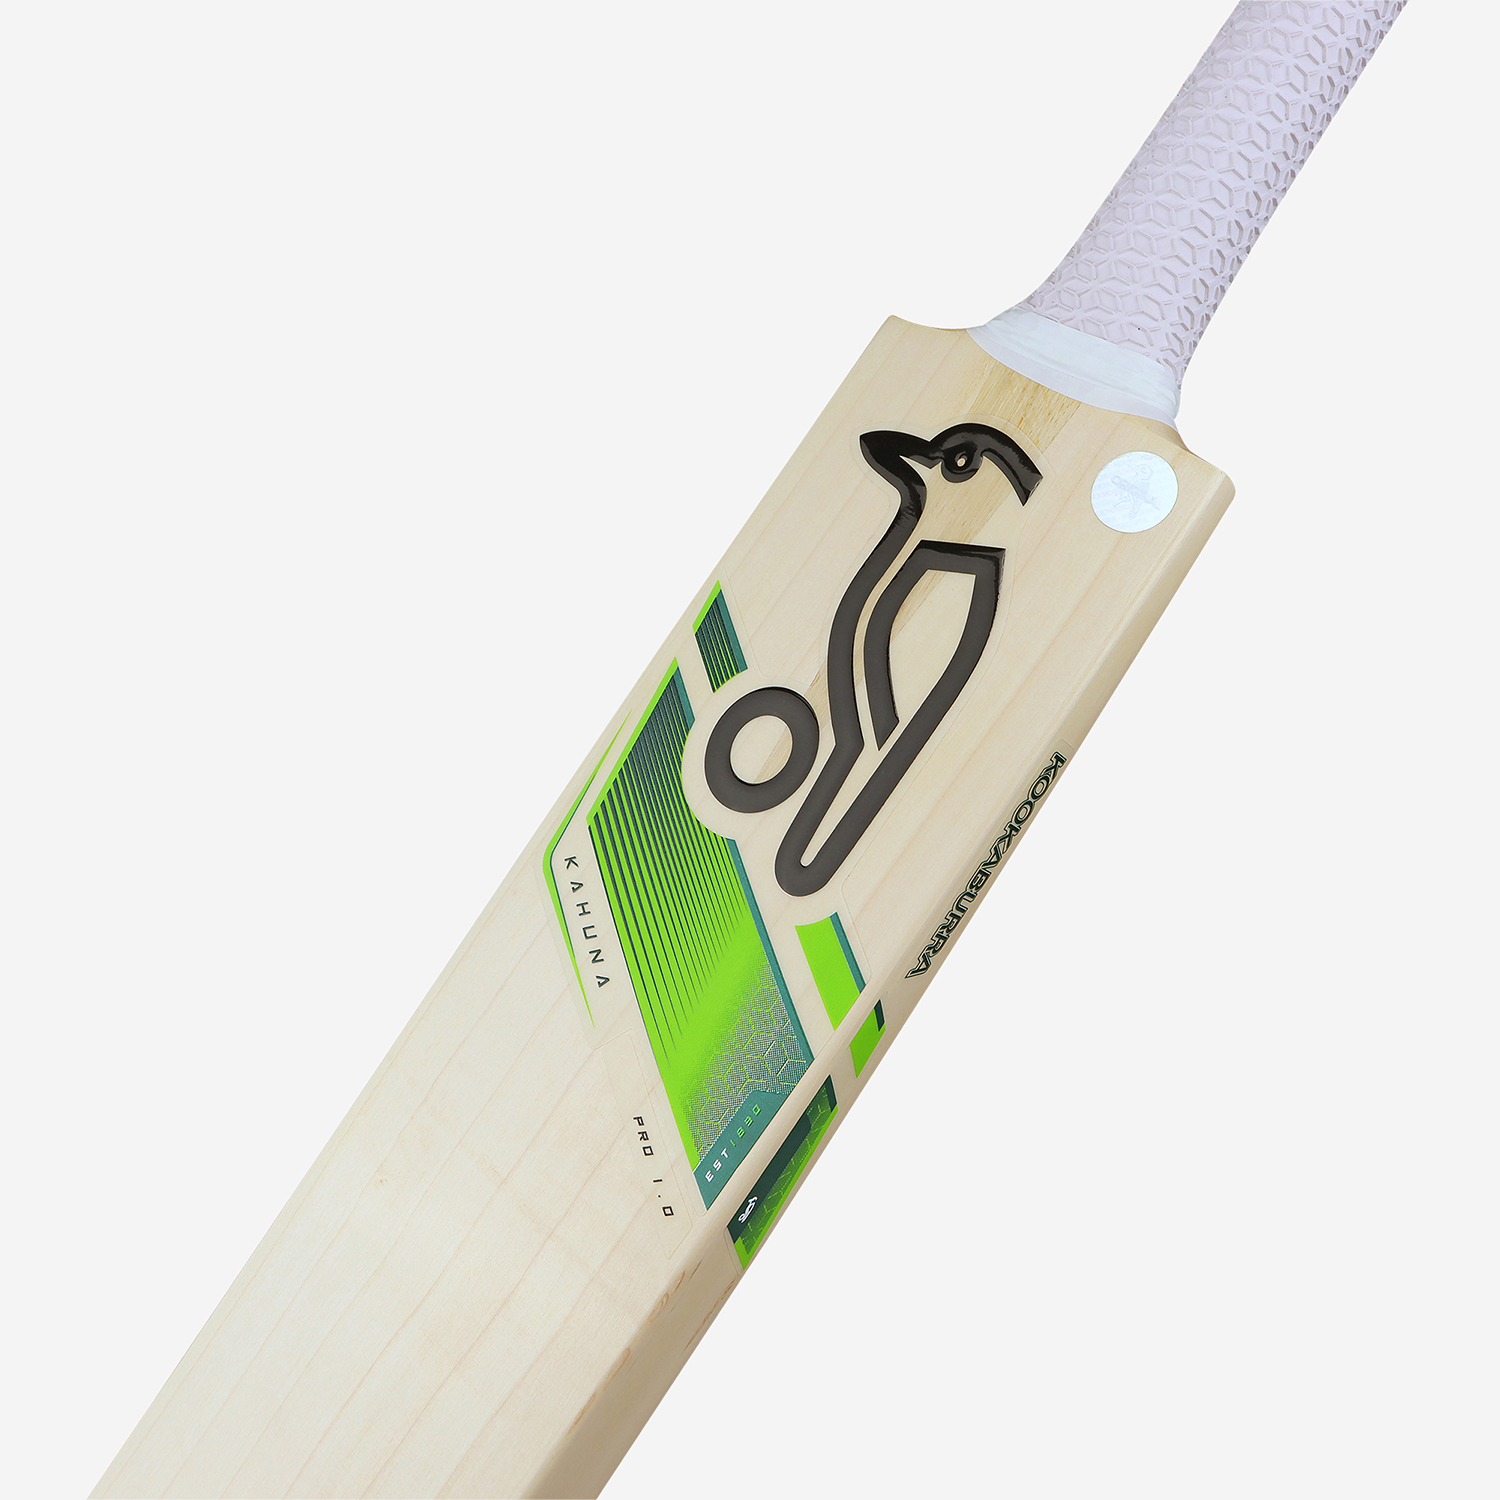 Pro 1.0 Kahuna Senior Cricket Bat